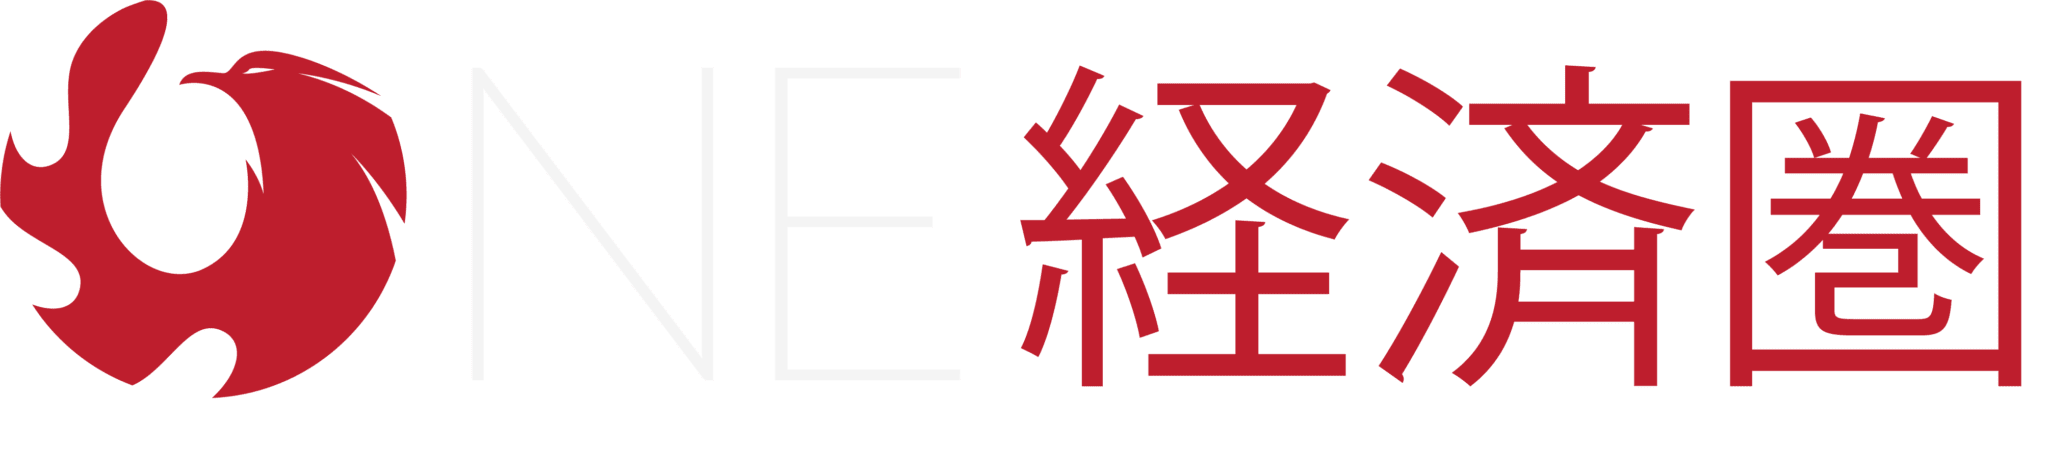 ONE経済圏ロゴ